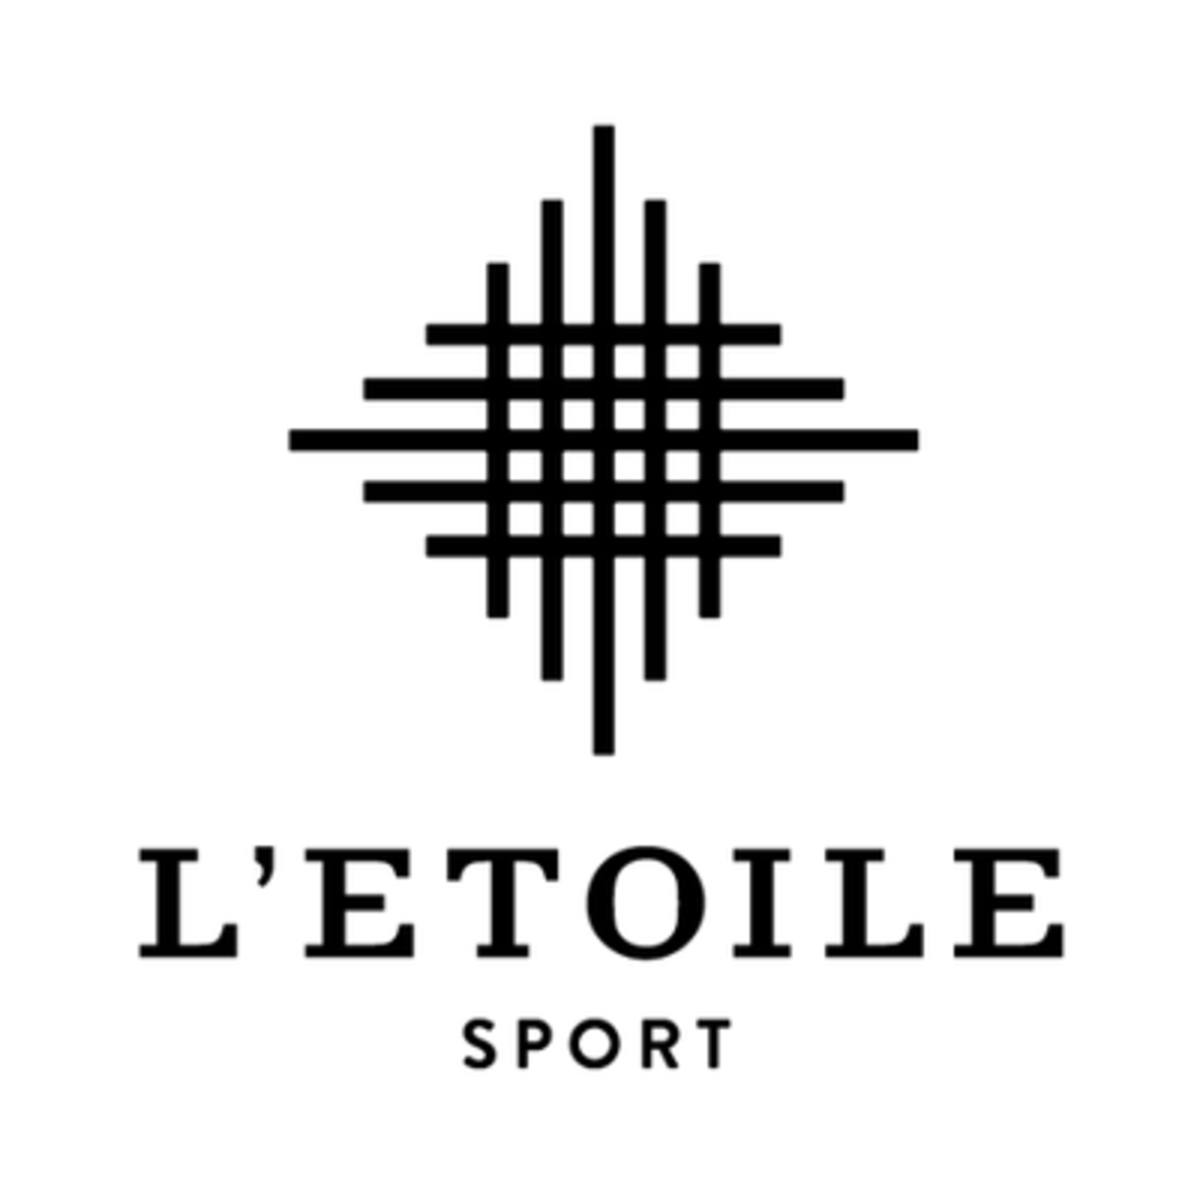 letoile sport logo